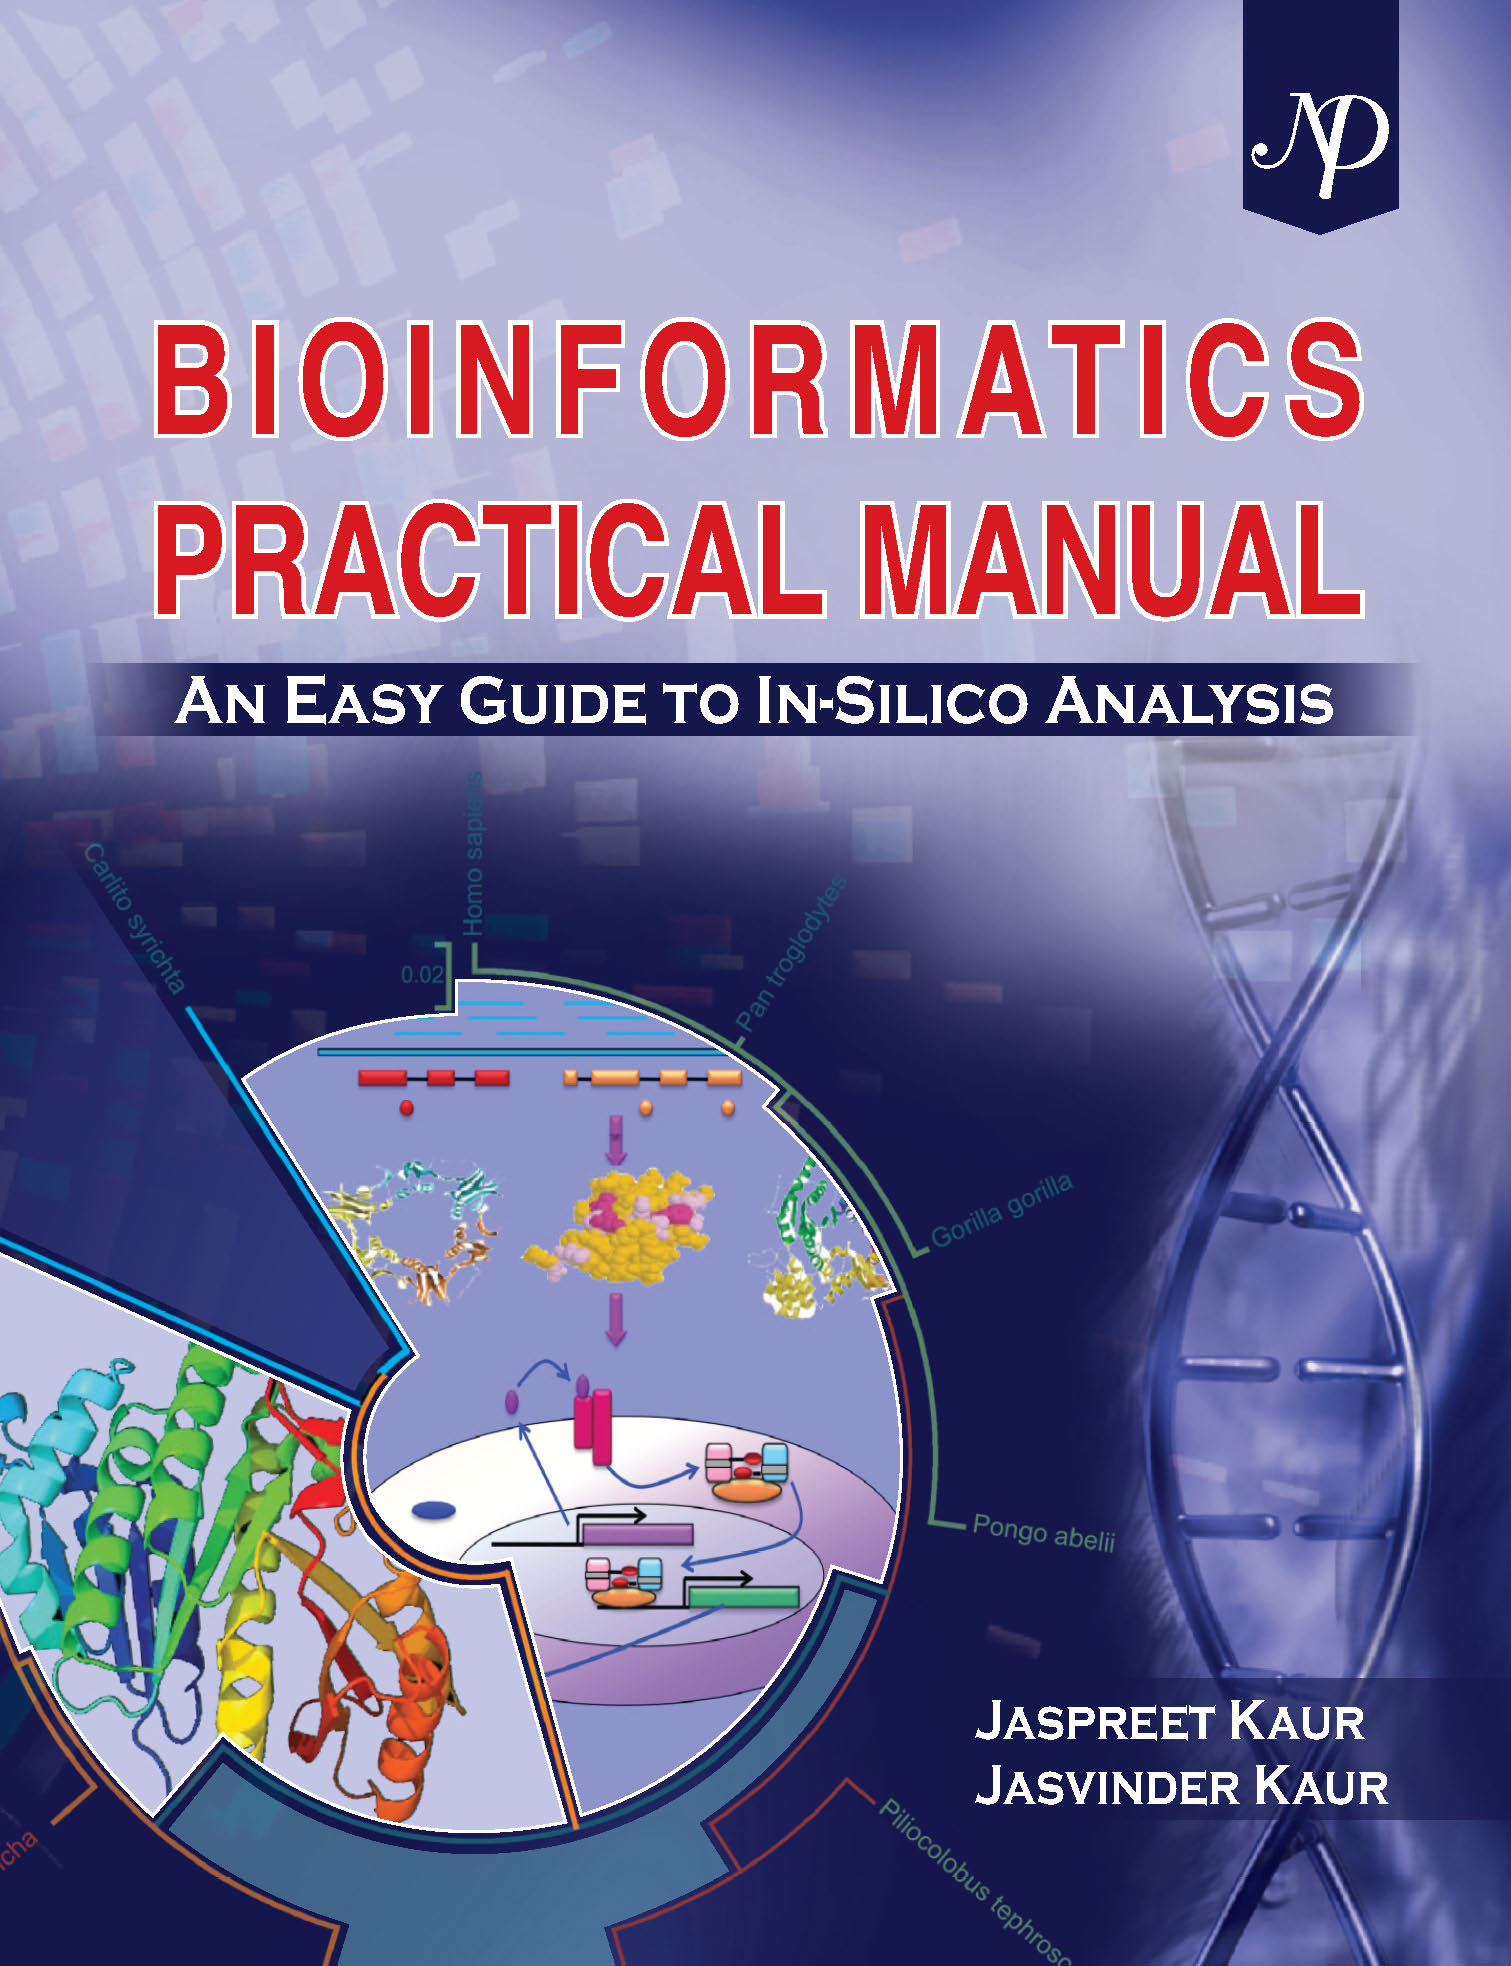 Bioinformatics Practical Manual COVER.jpg